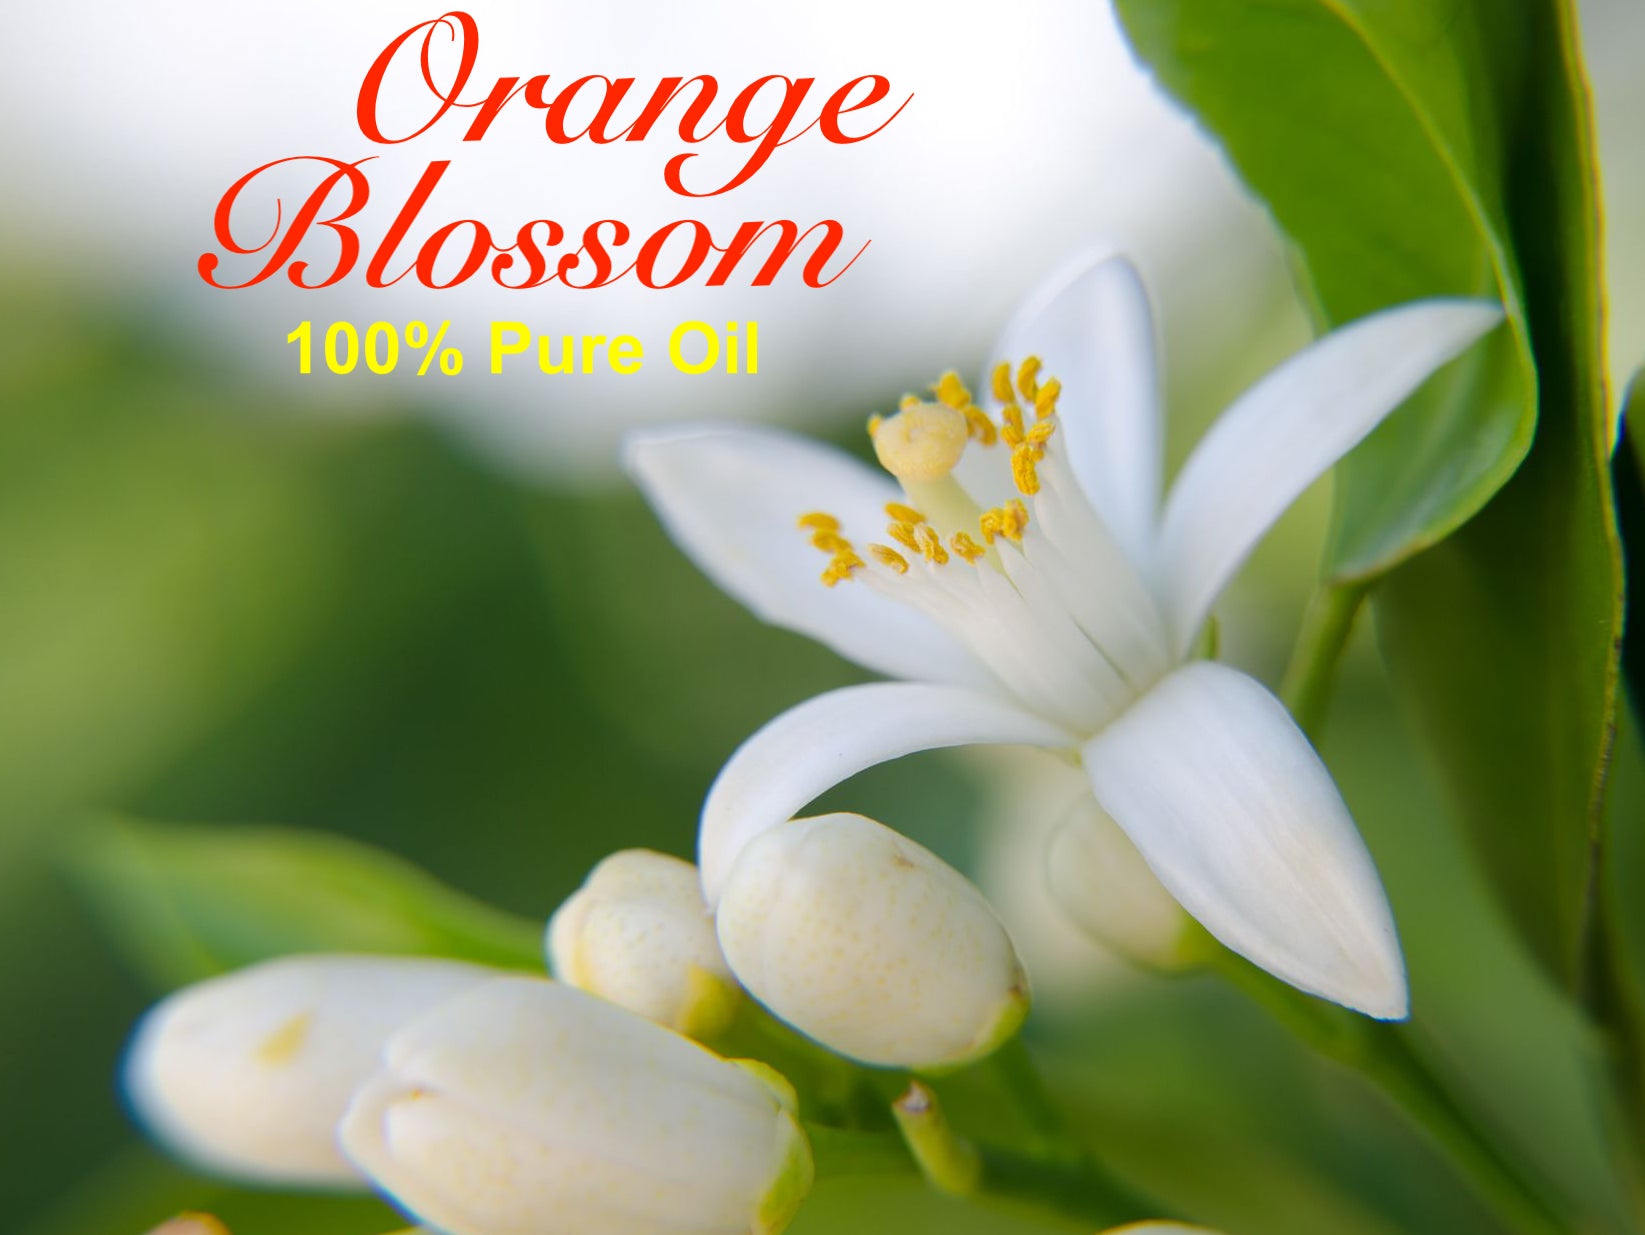 Orange Blossom Essential Oil